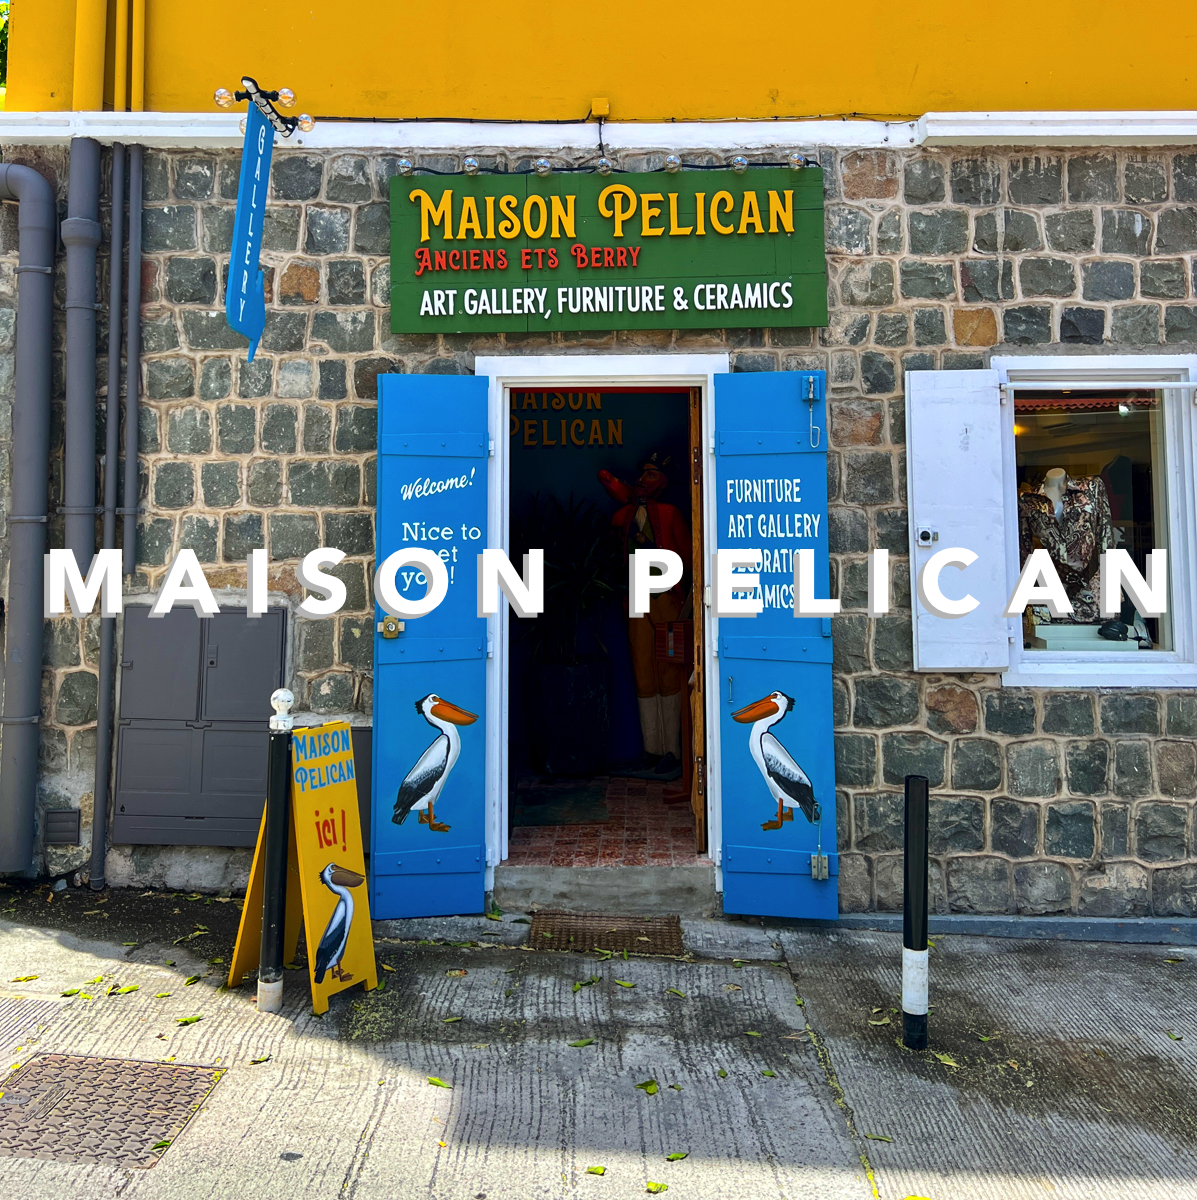 Maison Pelican in St. Barths